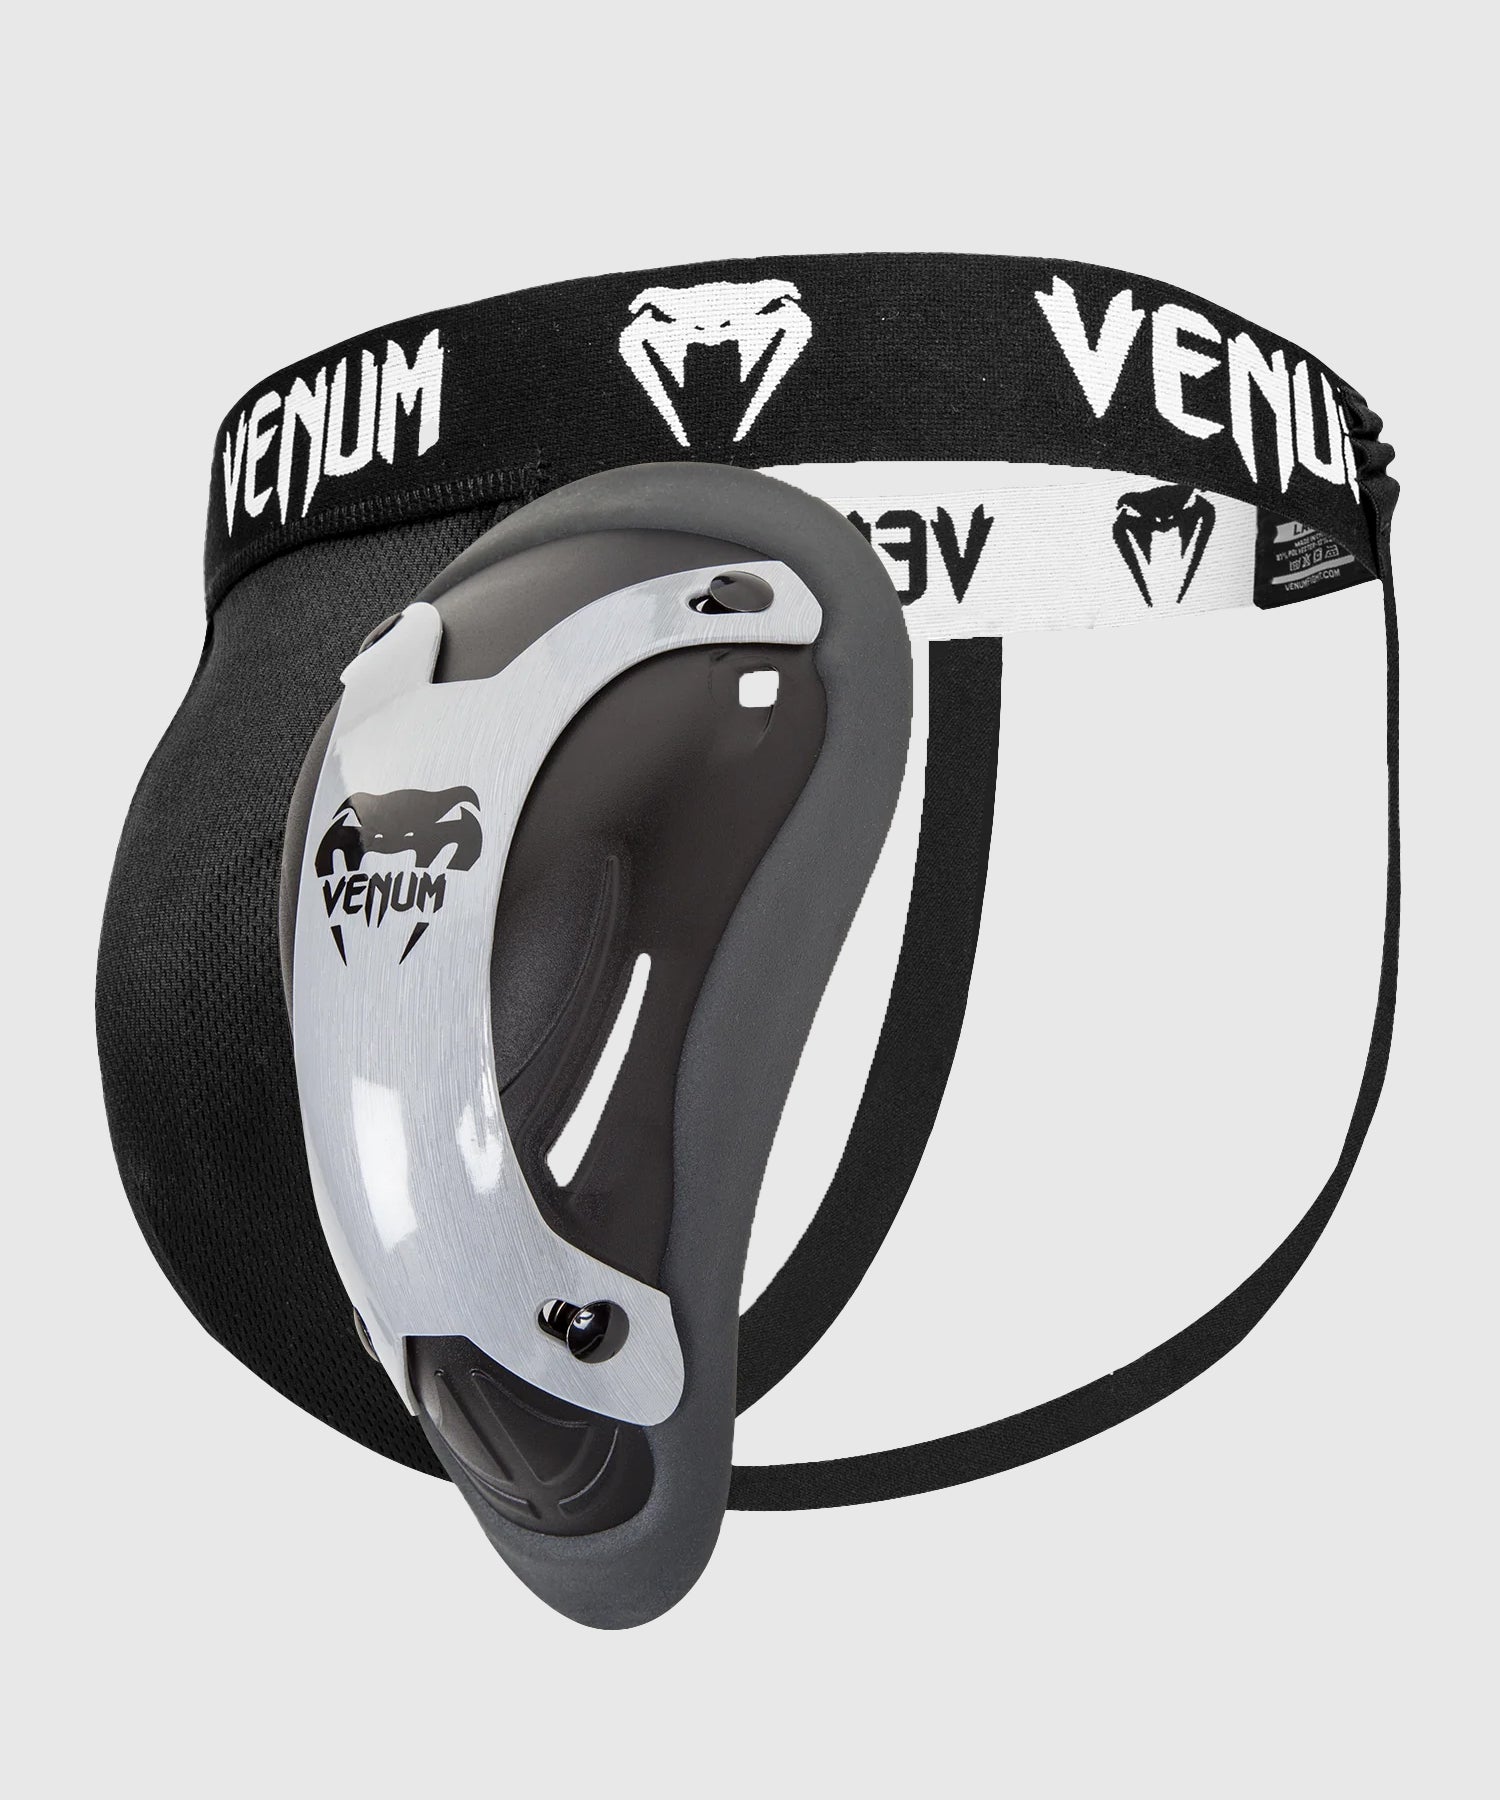 Venum Competitor Protective Cup - Silver Series - Venum